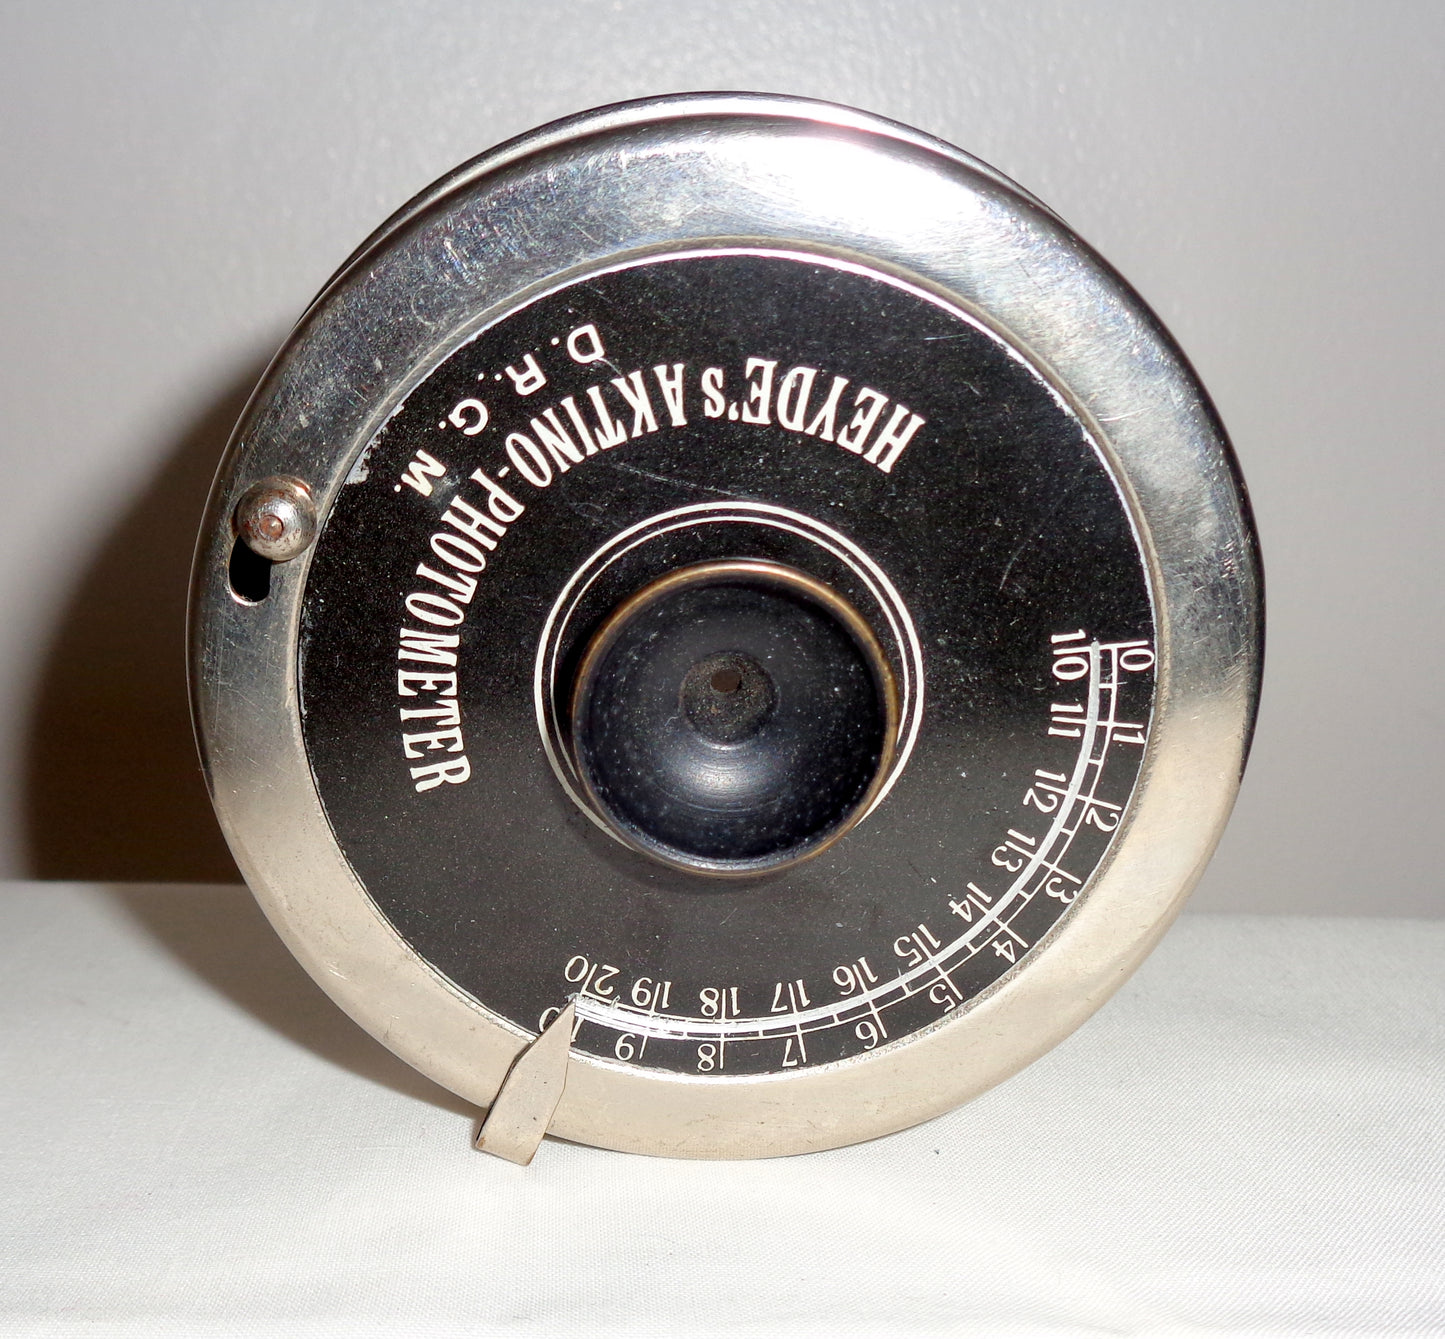 Antique Heyde's Aktino Photometer Exposure Meter